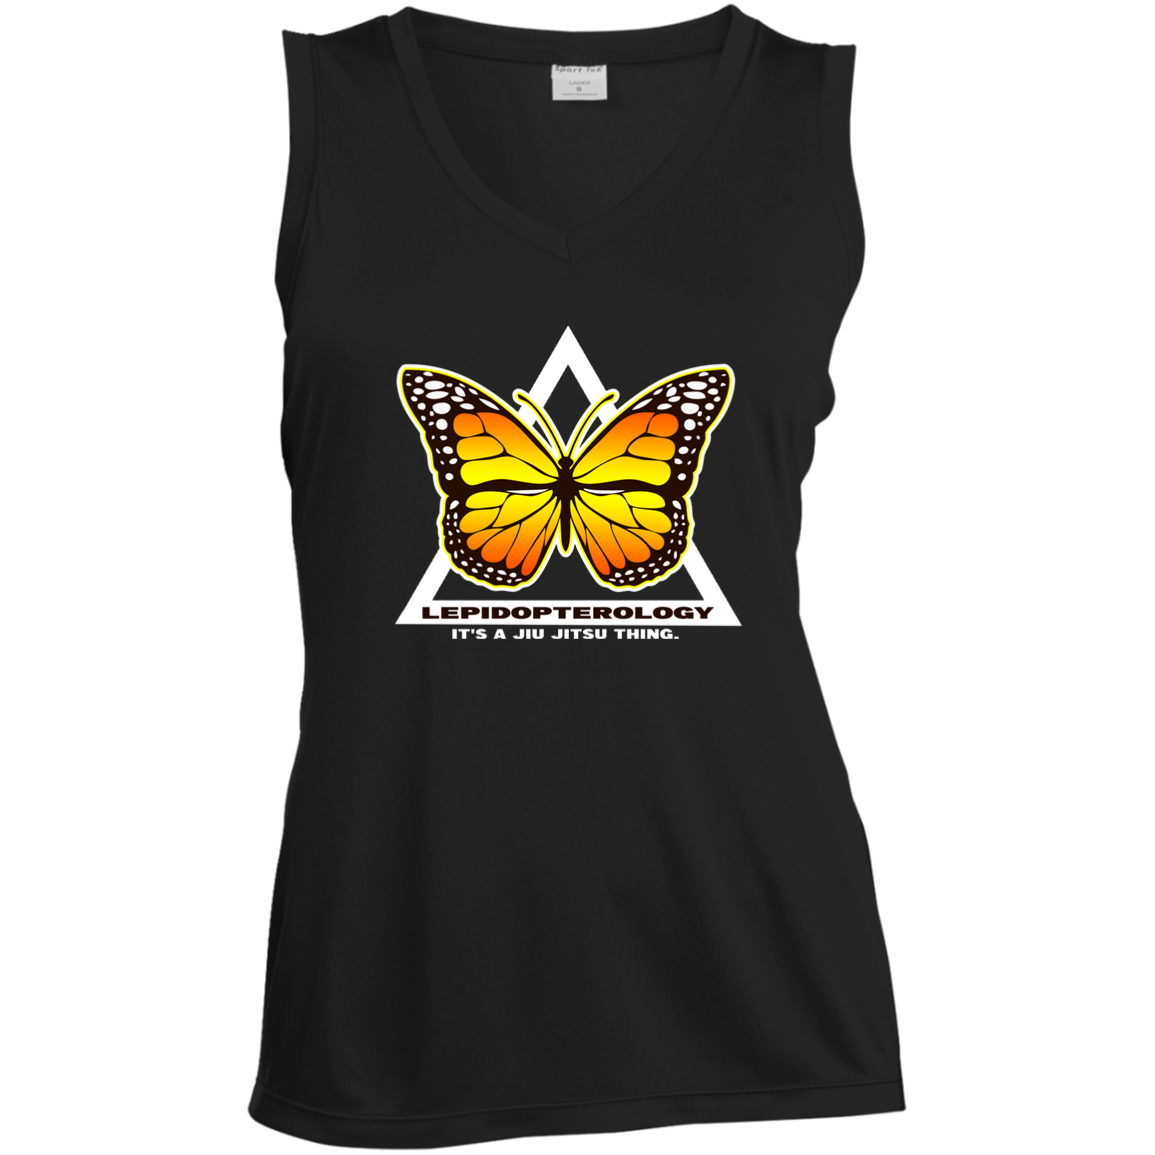 Artichoke Fight Gear Custom Design #6. Lepidopterology (Study of butterflies). Butterfly Guard. Ladies' Sleeveless V-Neck Performance Tee